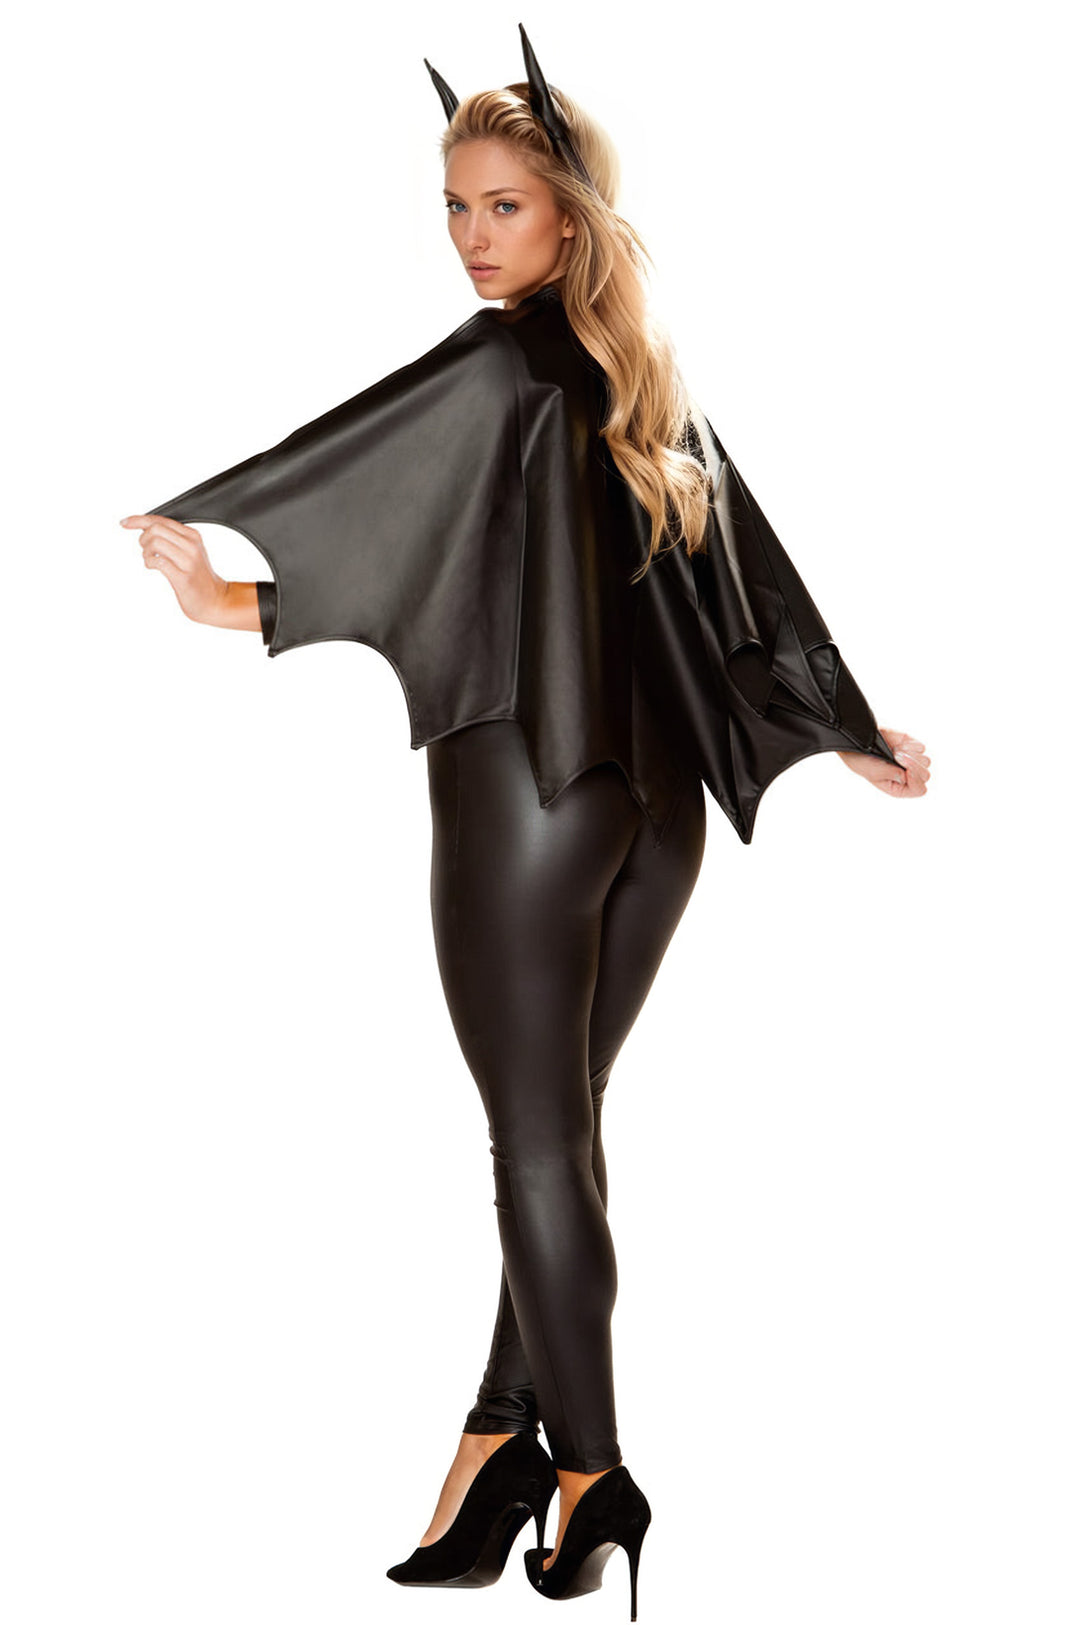 Sexy Bat Crusader Costume